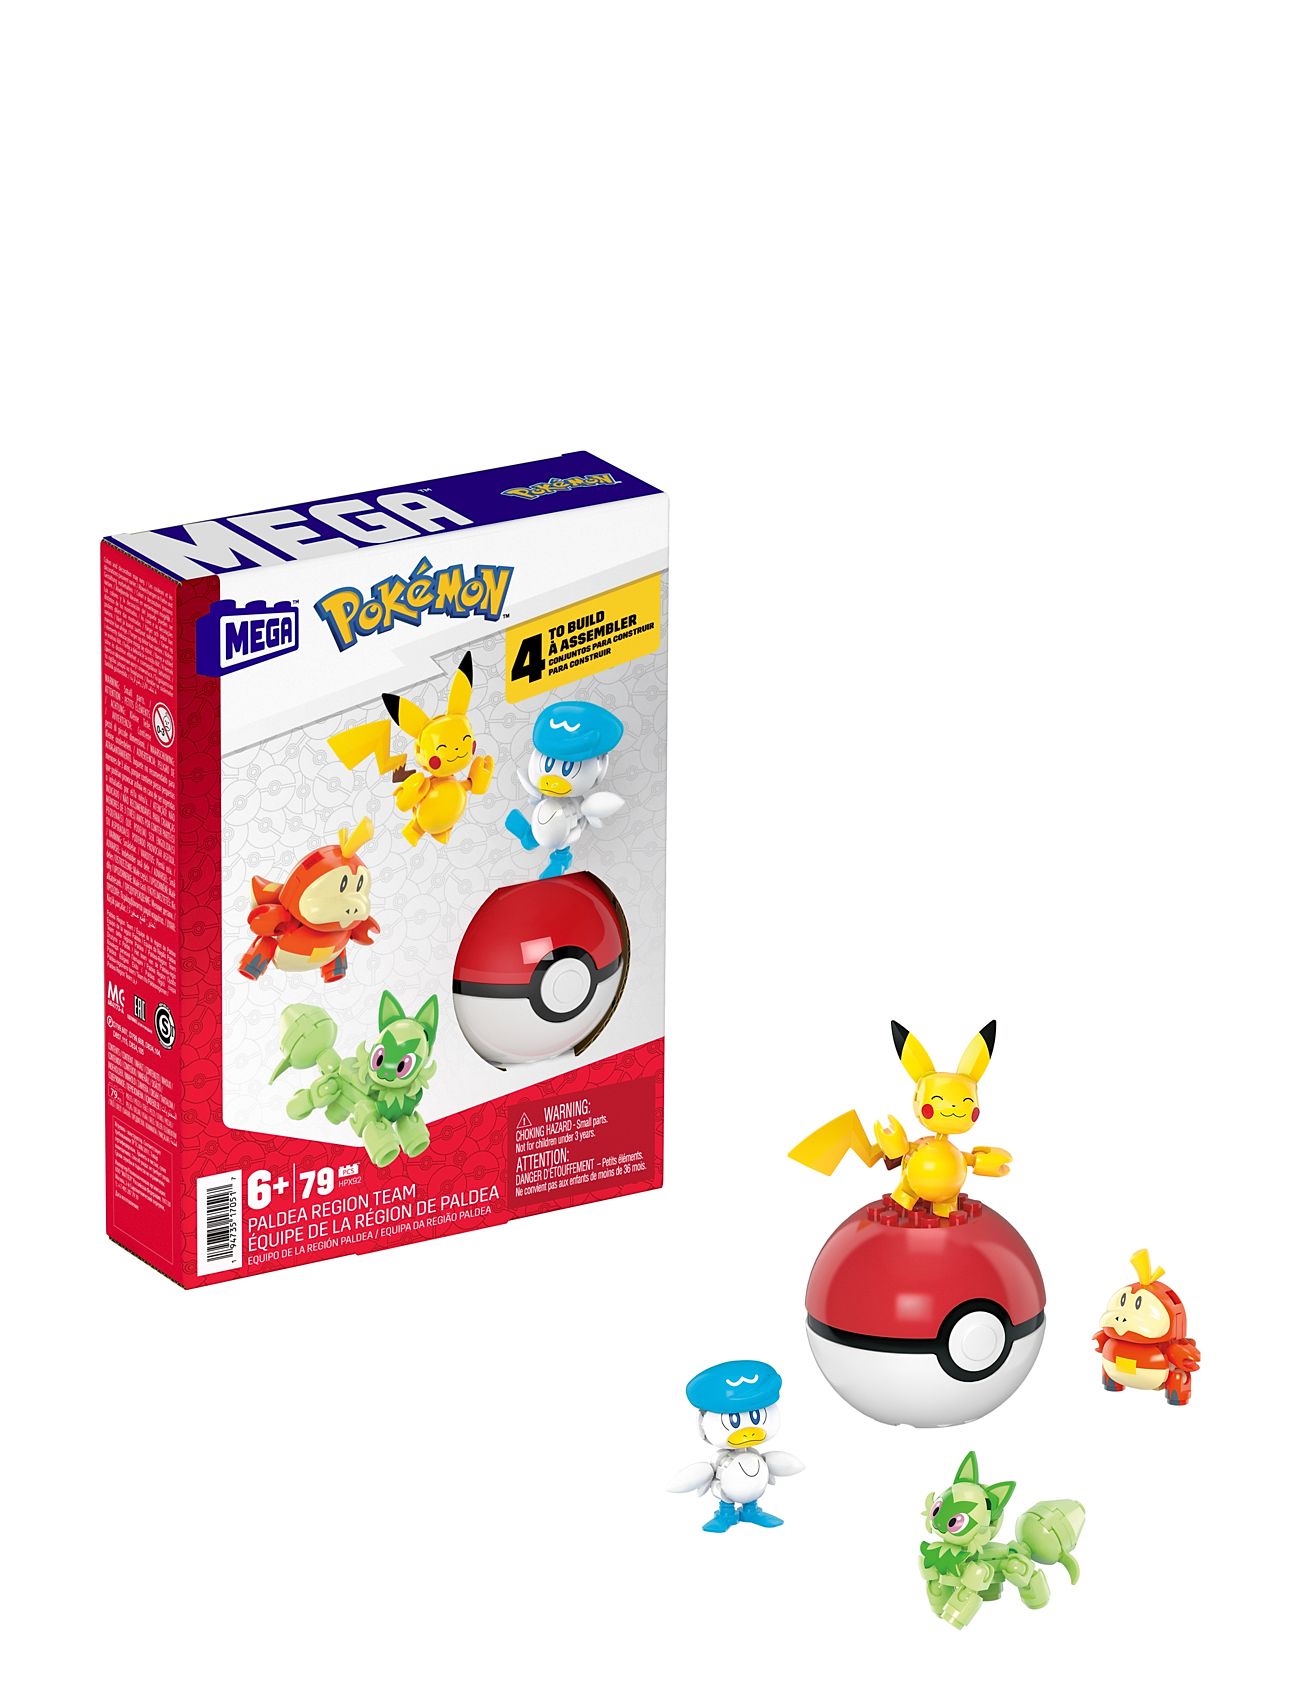 Pokémon Paldea Region Team Toys Playsets & Action Figures Play Sets Multi/patterned MEGA Pokémon